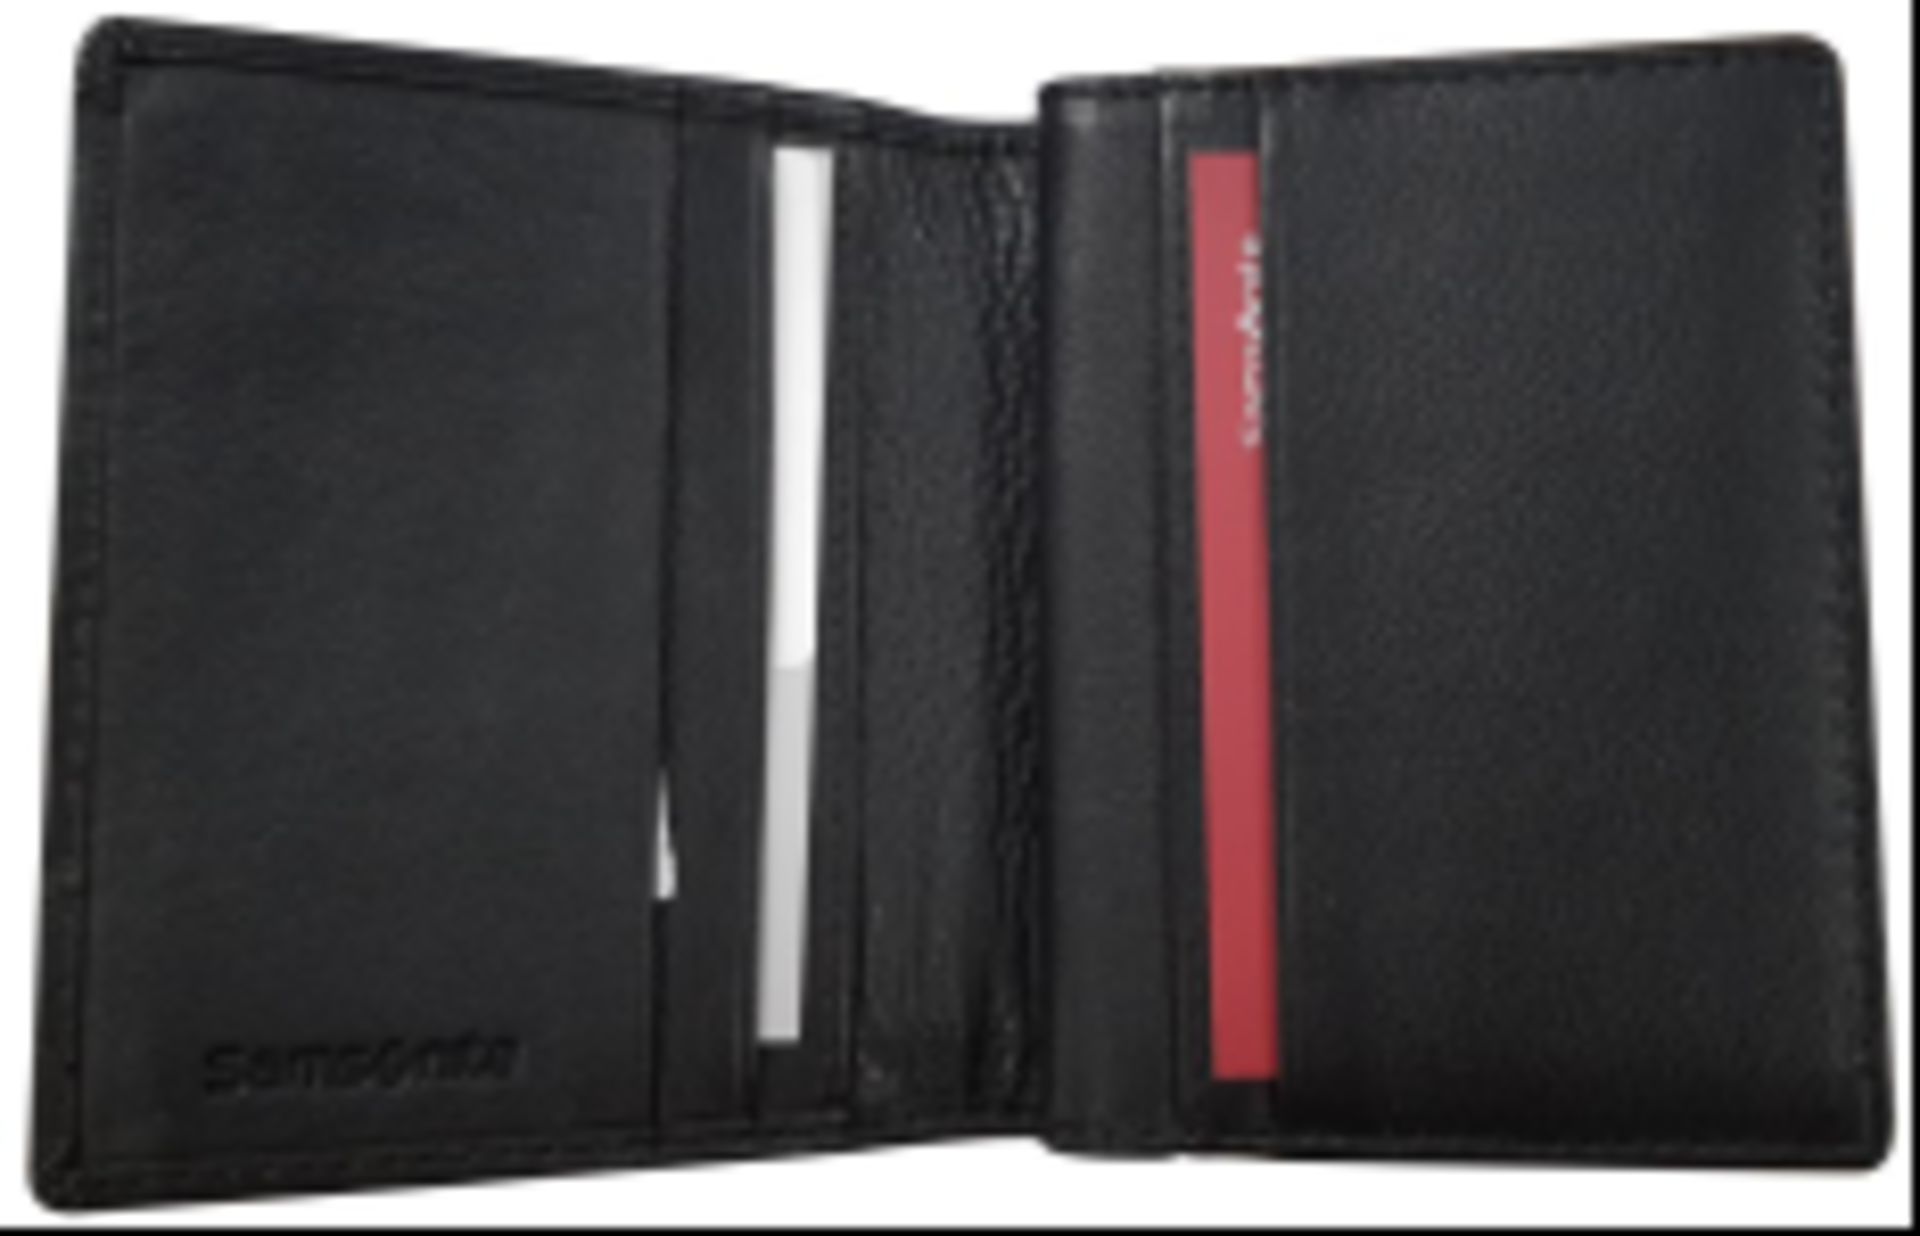 V *TRADE QTY* Brand New Samsonite Gents Black Leather Card Holder - 12 Credit Card Slots - RRP: £